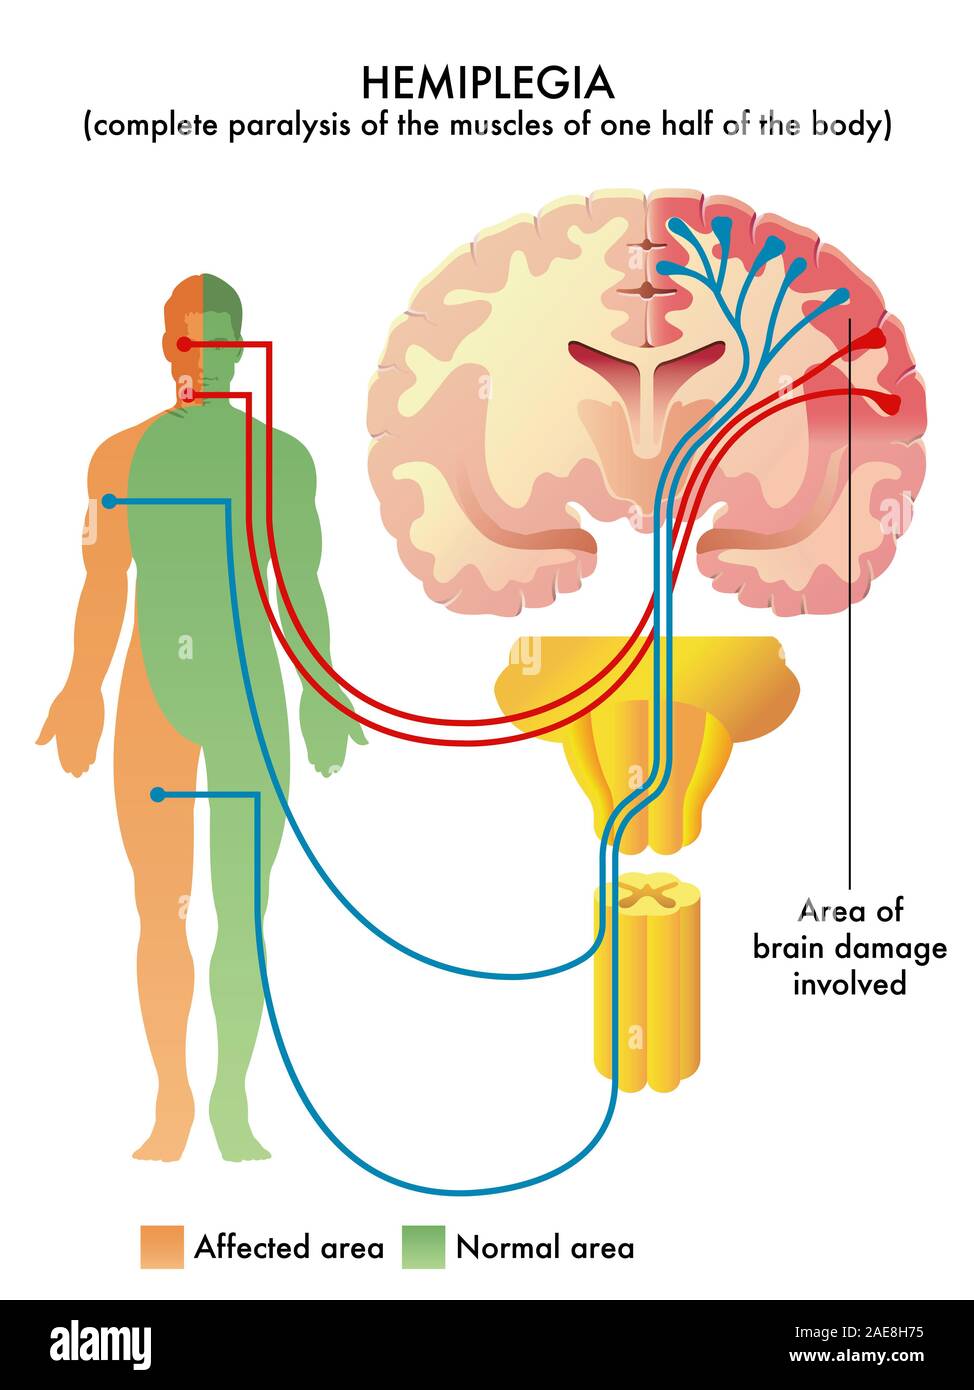 Detailed anatomical illustration of medical condition called Hemiplegia. Stock Photo